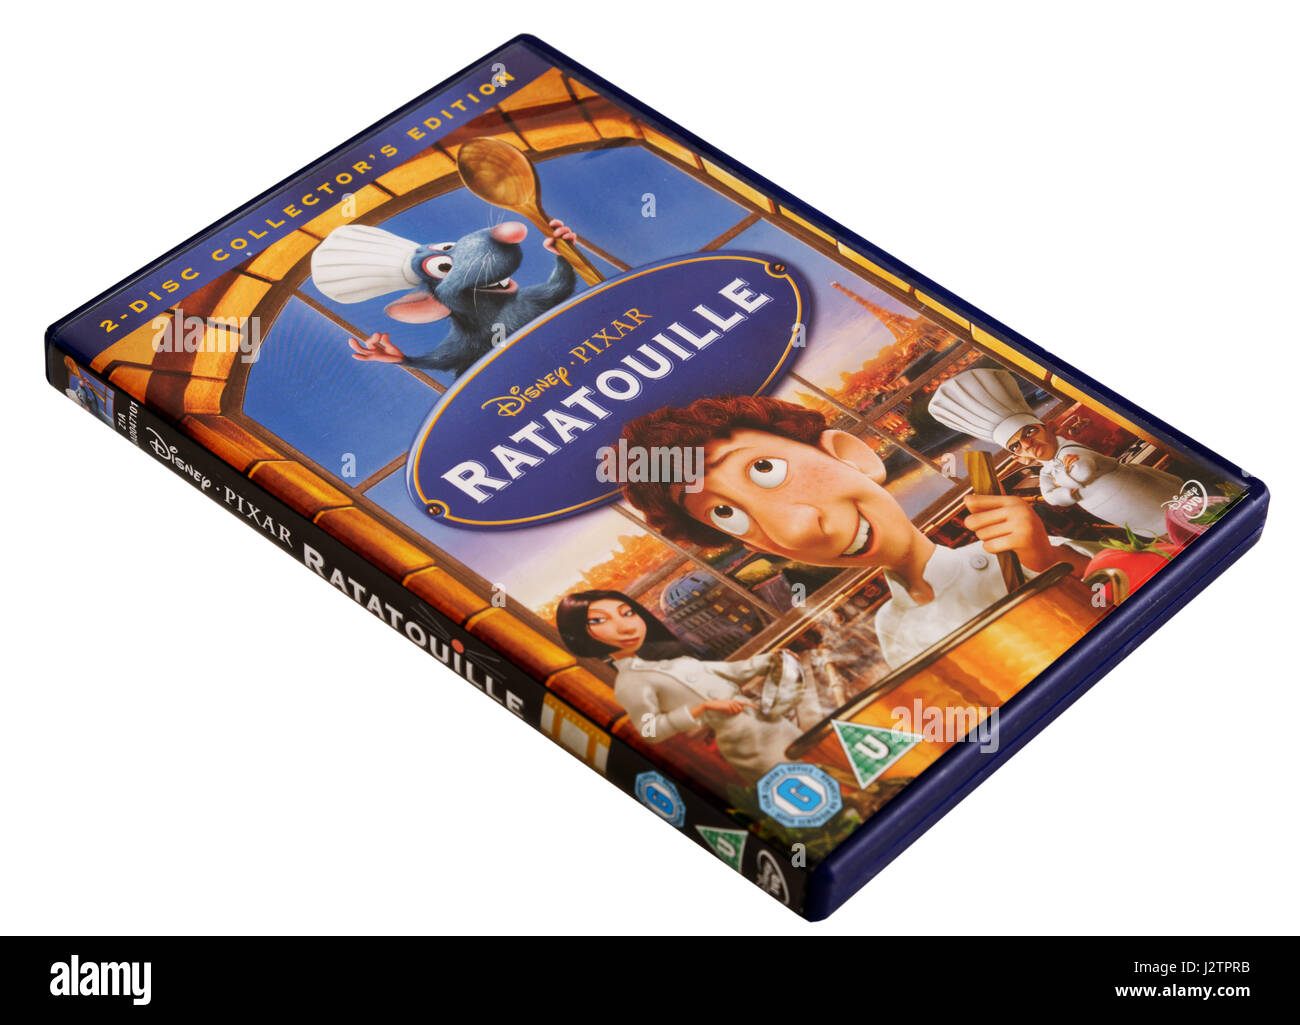 Disney's Ratatouille DVD Stock Photo - Alamy